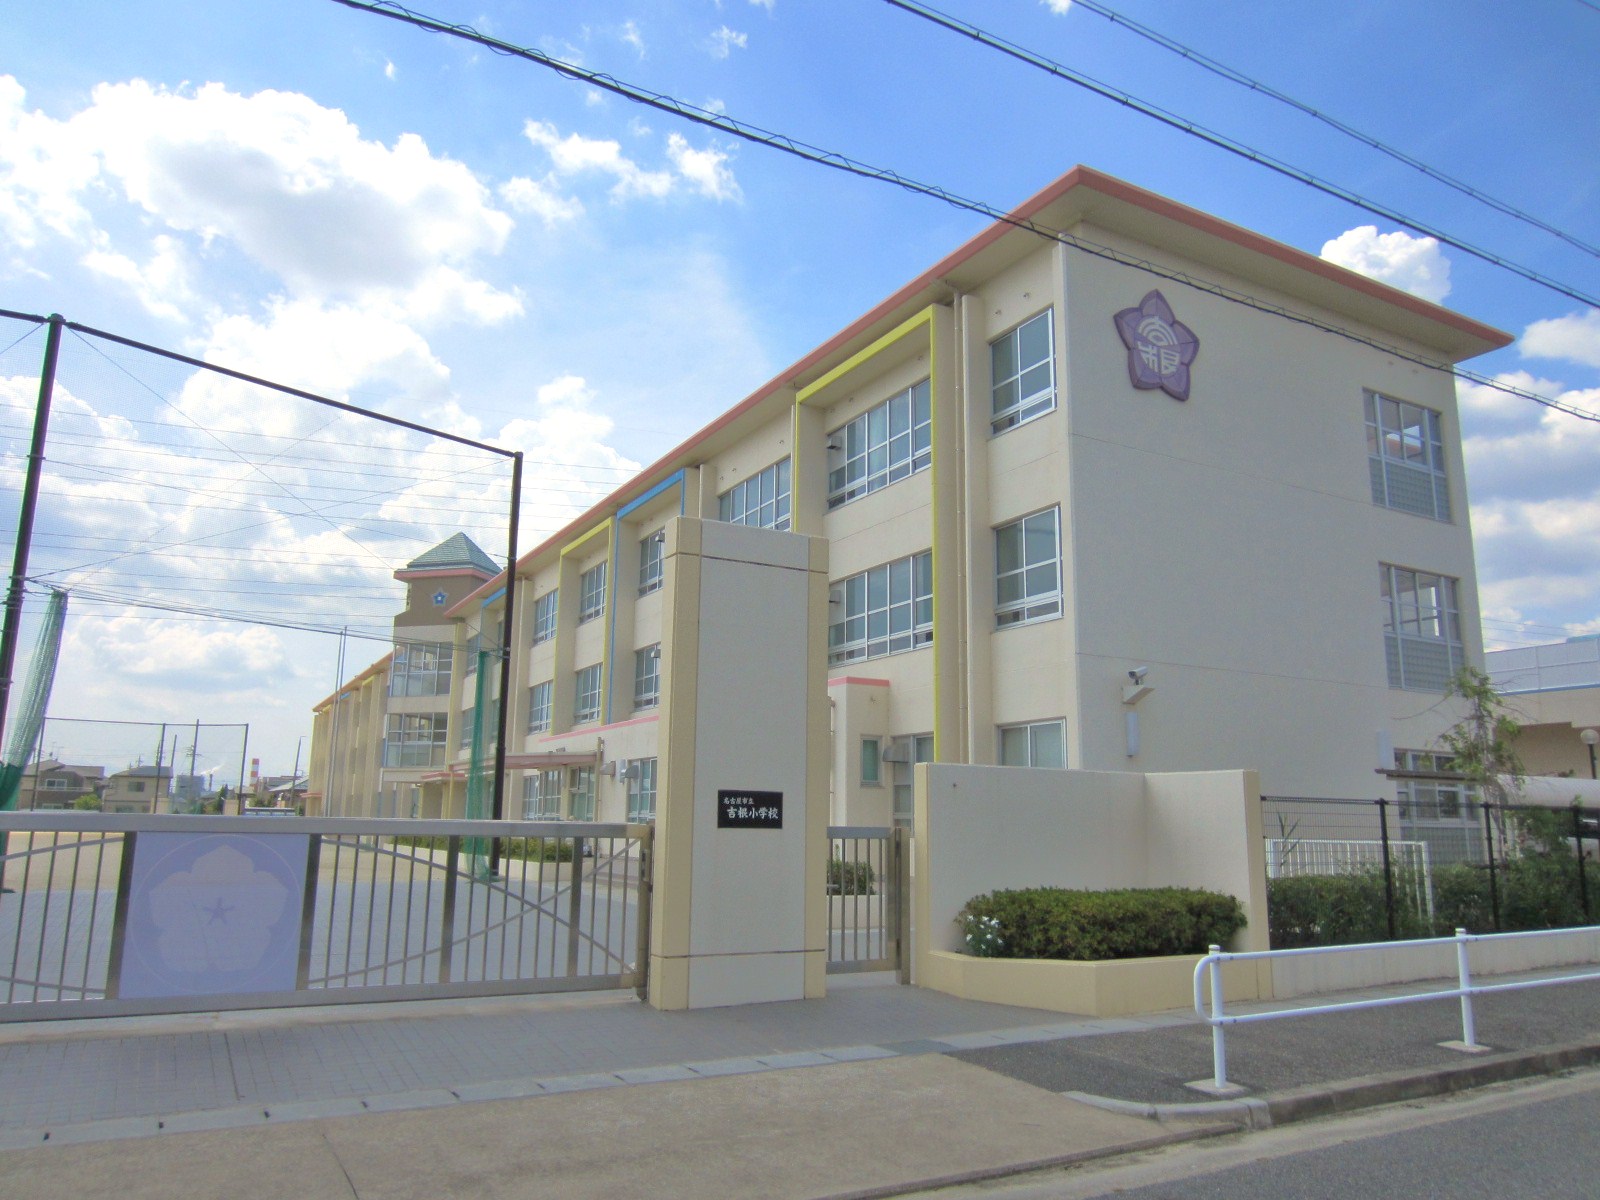 Primary school. 442m to Nagoya Municipal Yoshine elementary school (elementary school)